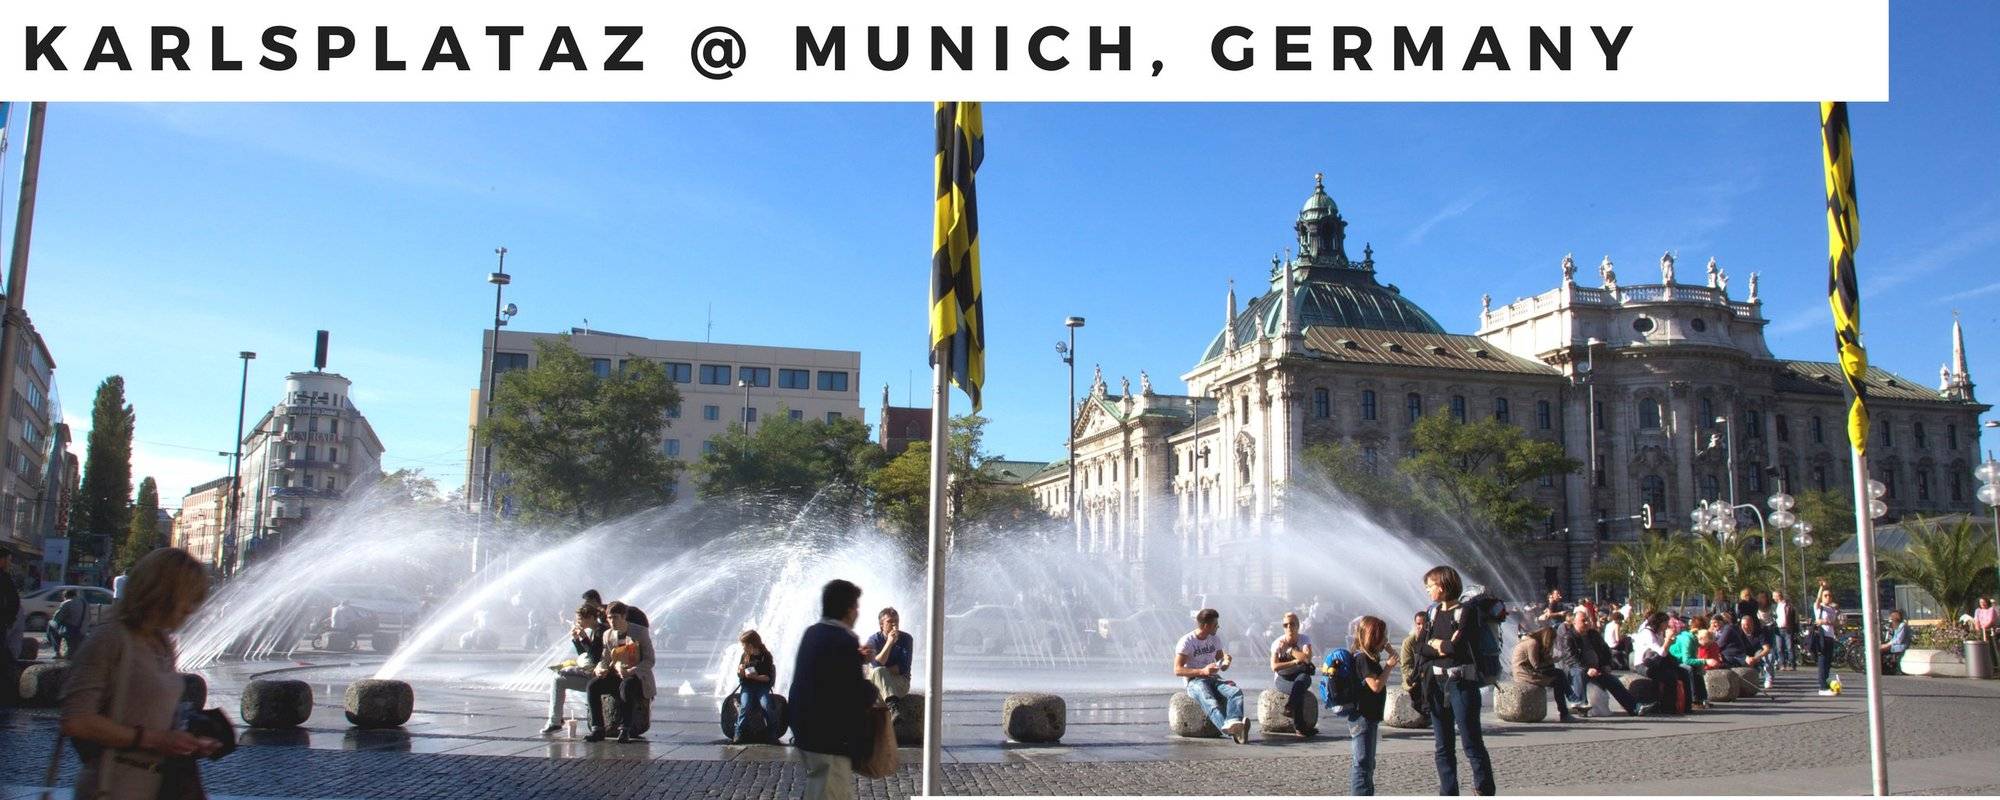 Traveling the World #120 (Europe Series) -Visiting Juliet Capulet Statue & Karlsplatz @ Munich, Germany